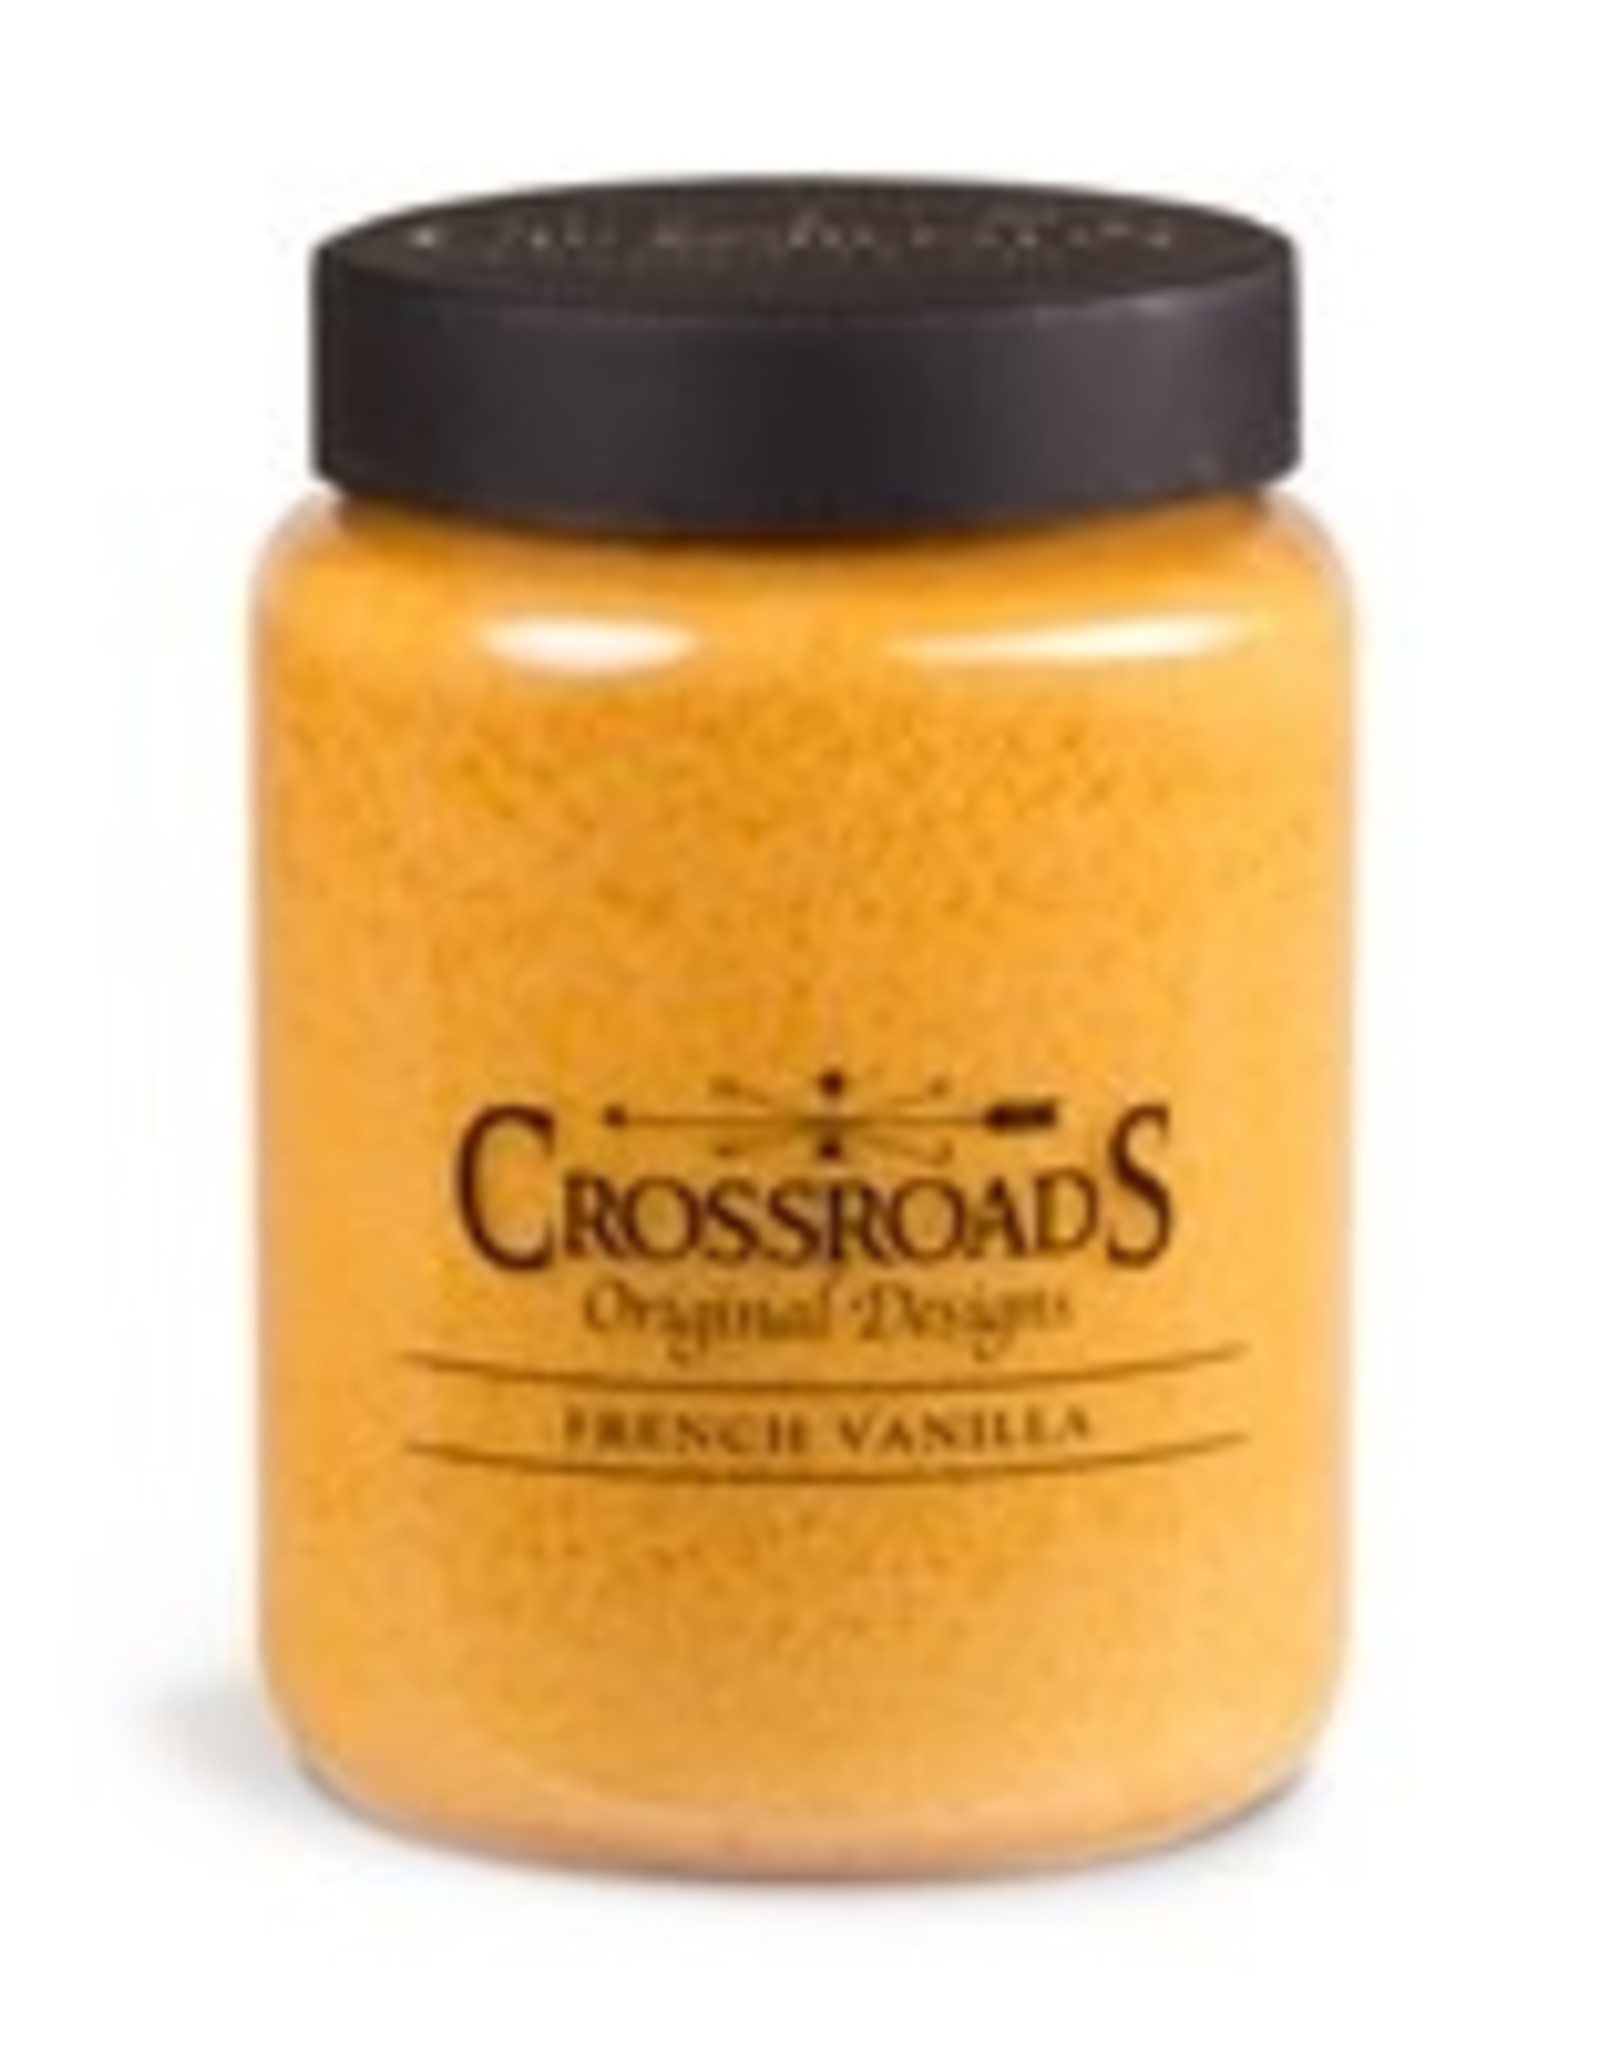 Crossroads French Vanilla Candle